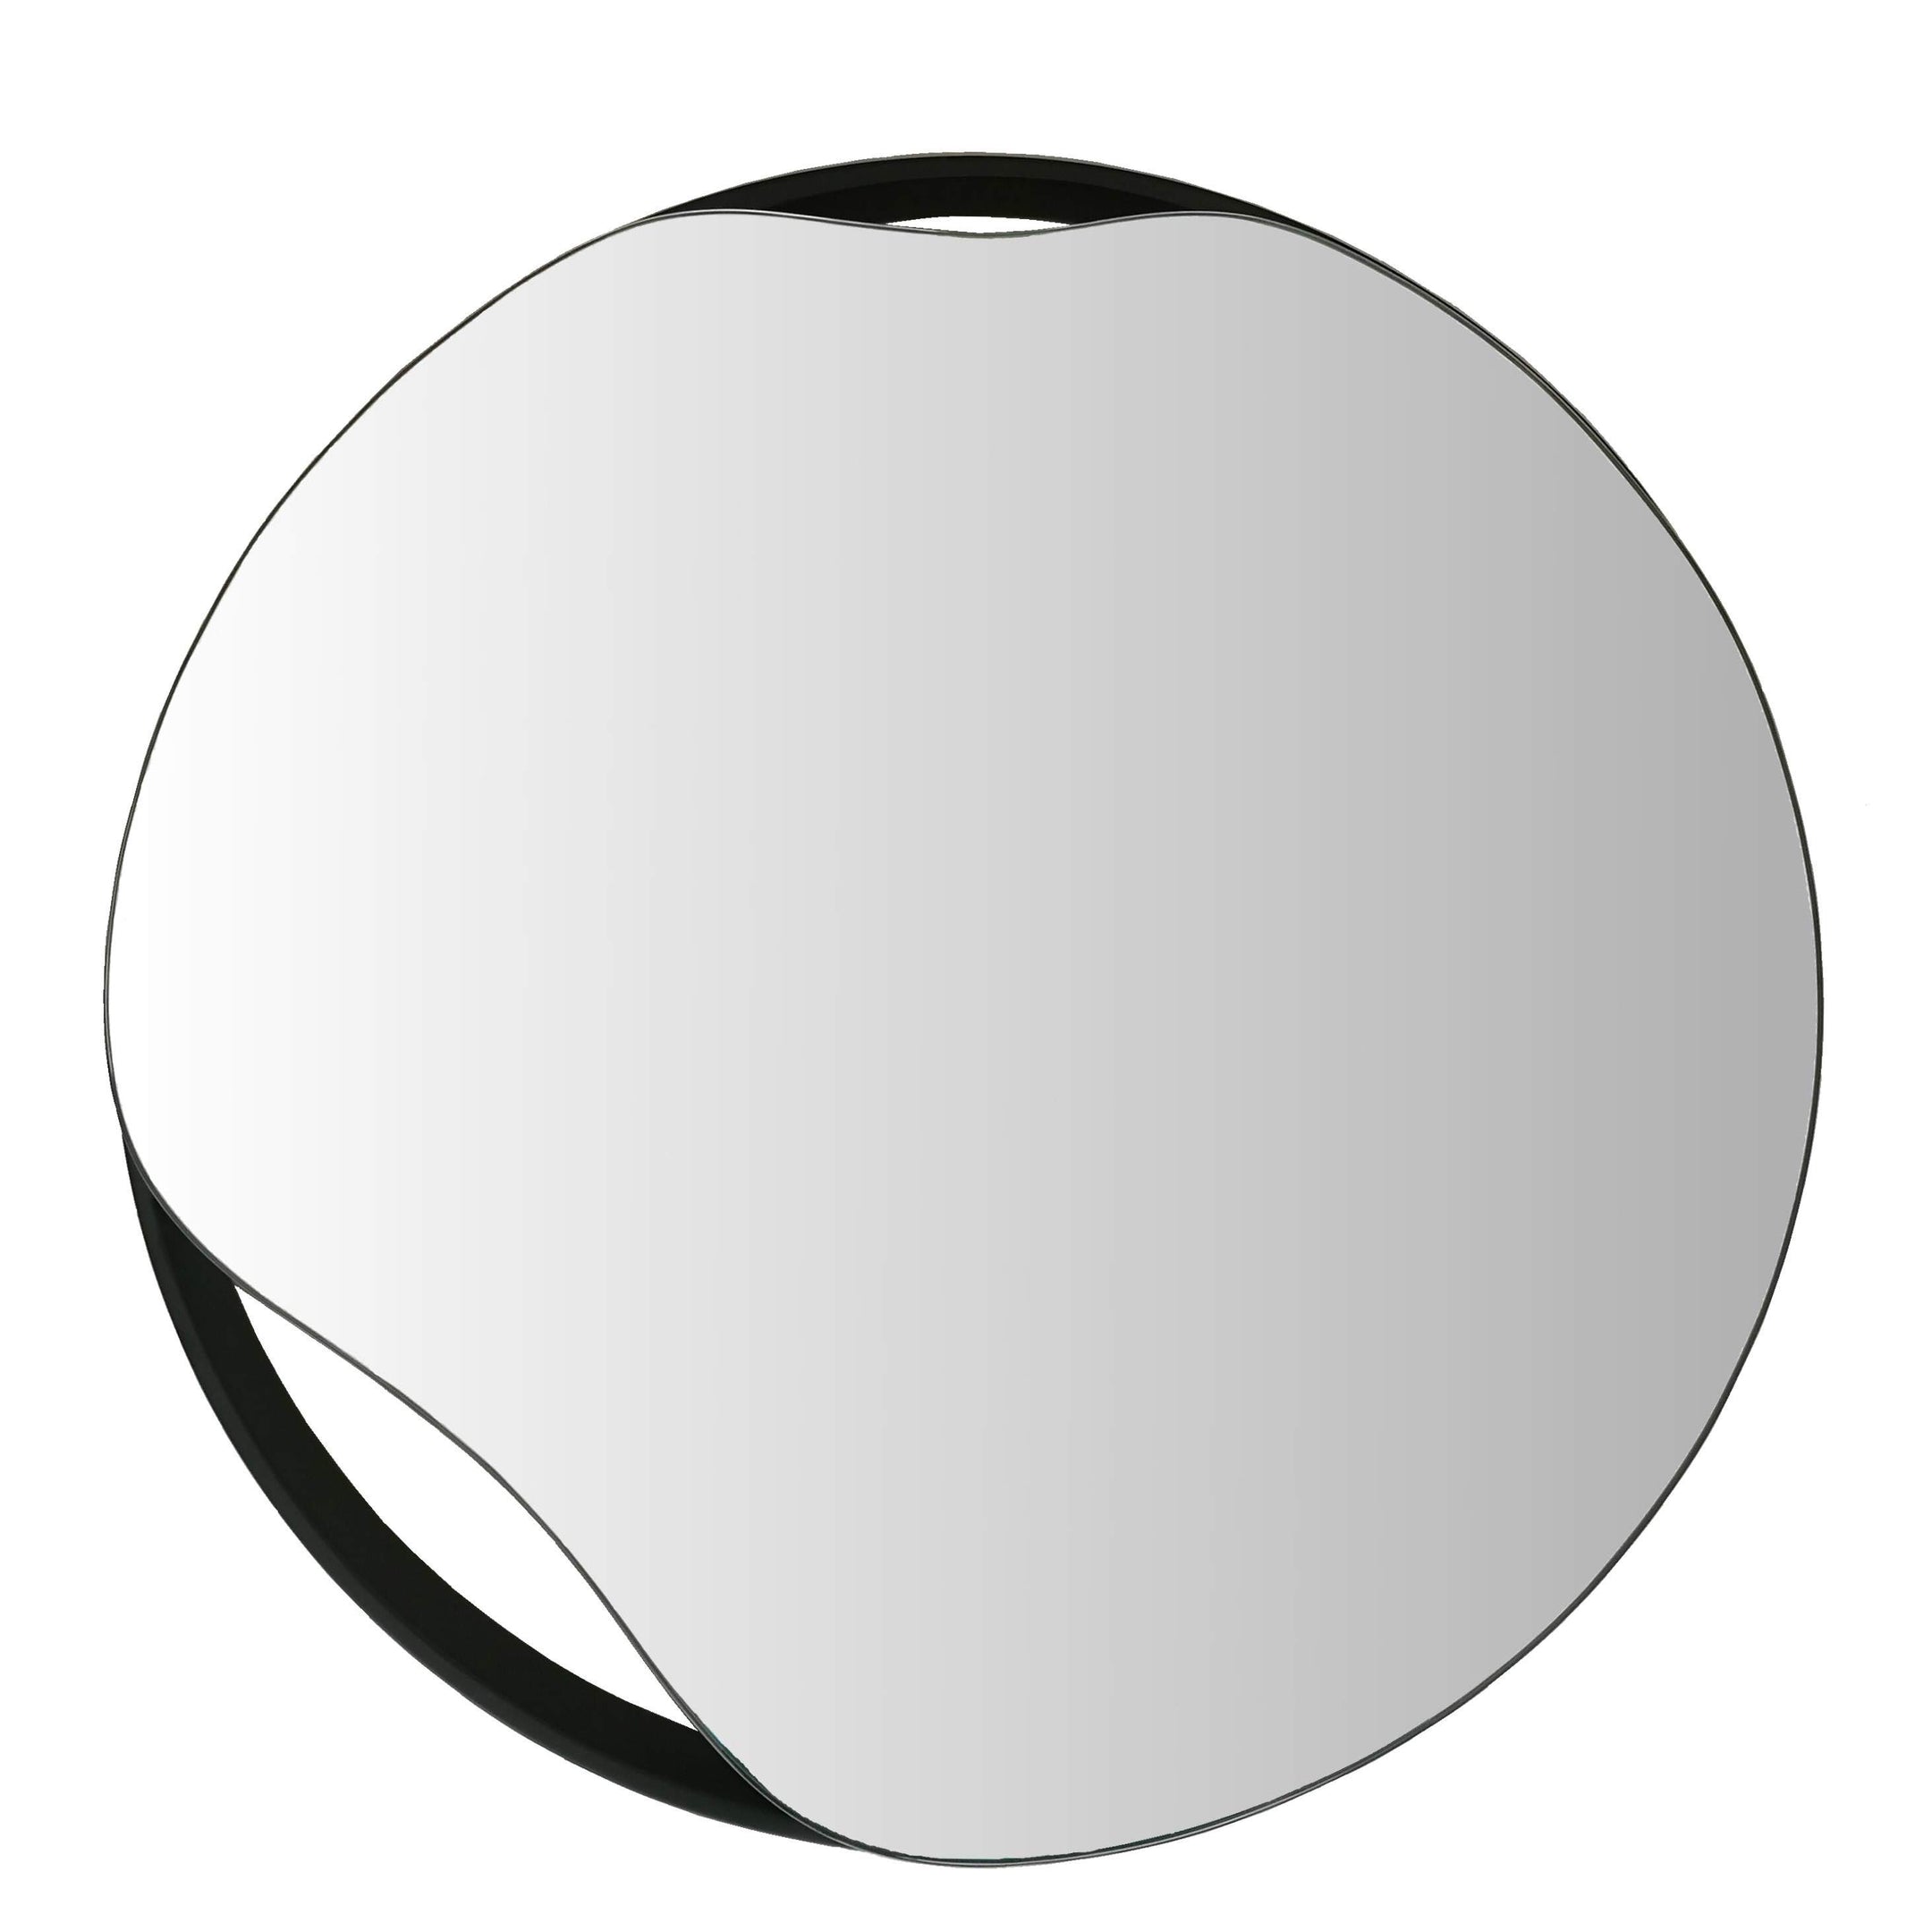 Buy Round mirror PUDDLE by Biotite